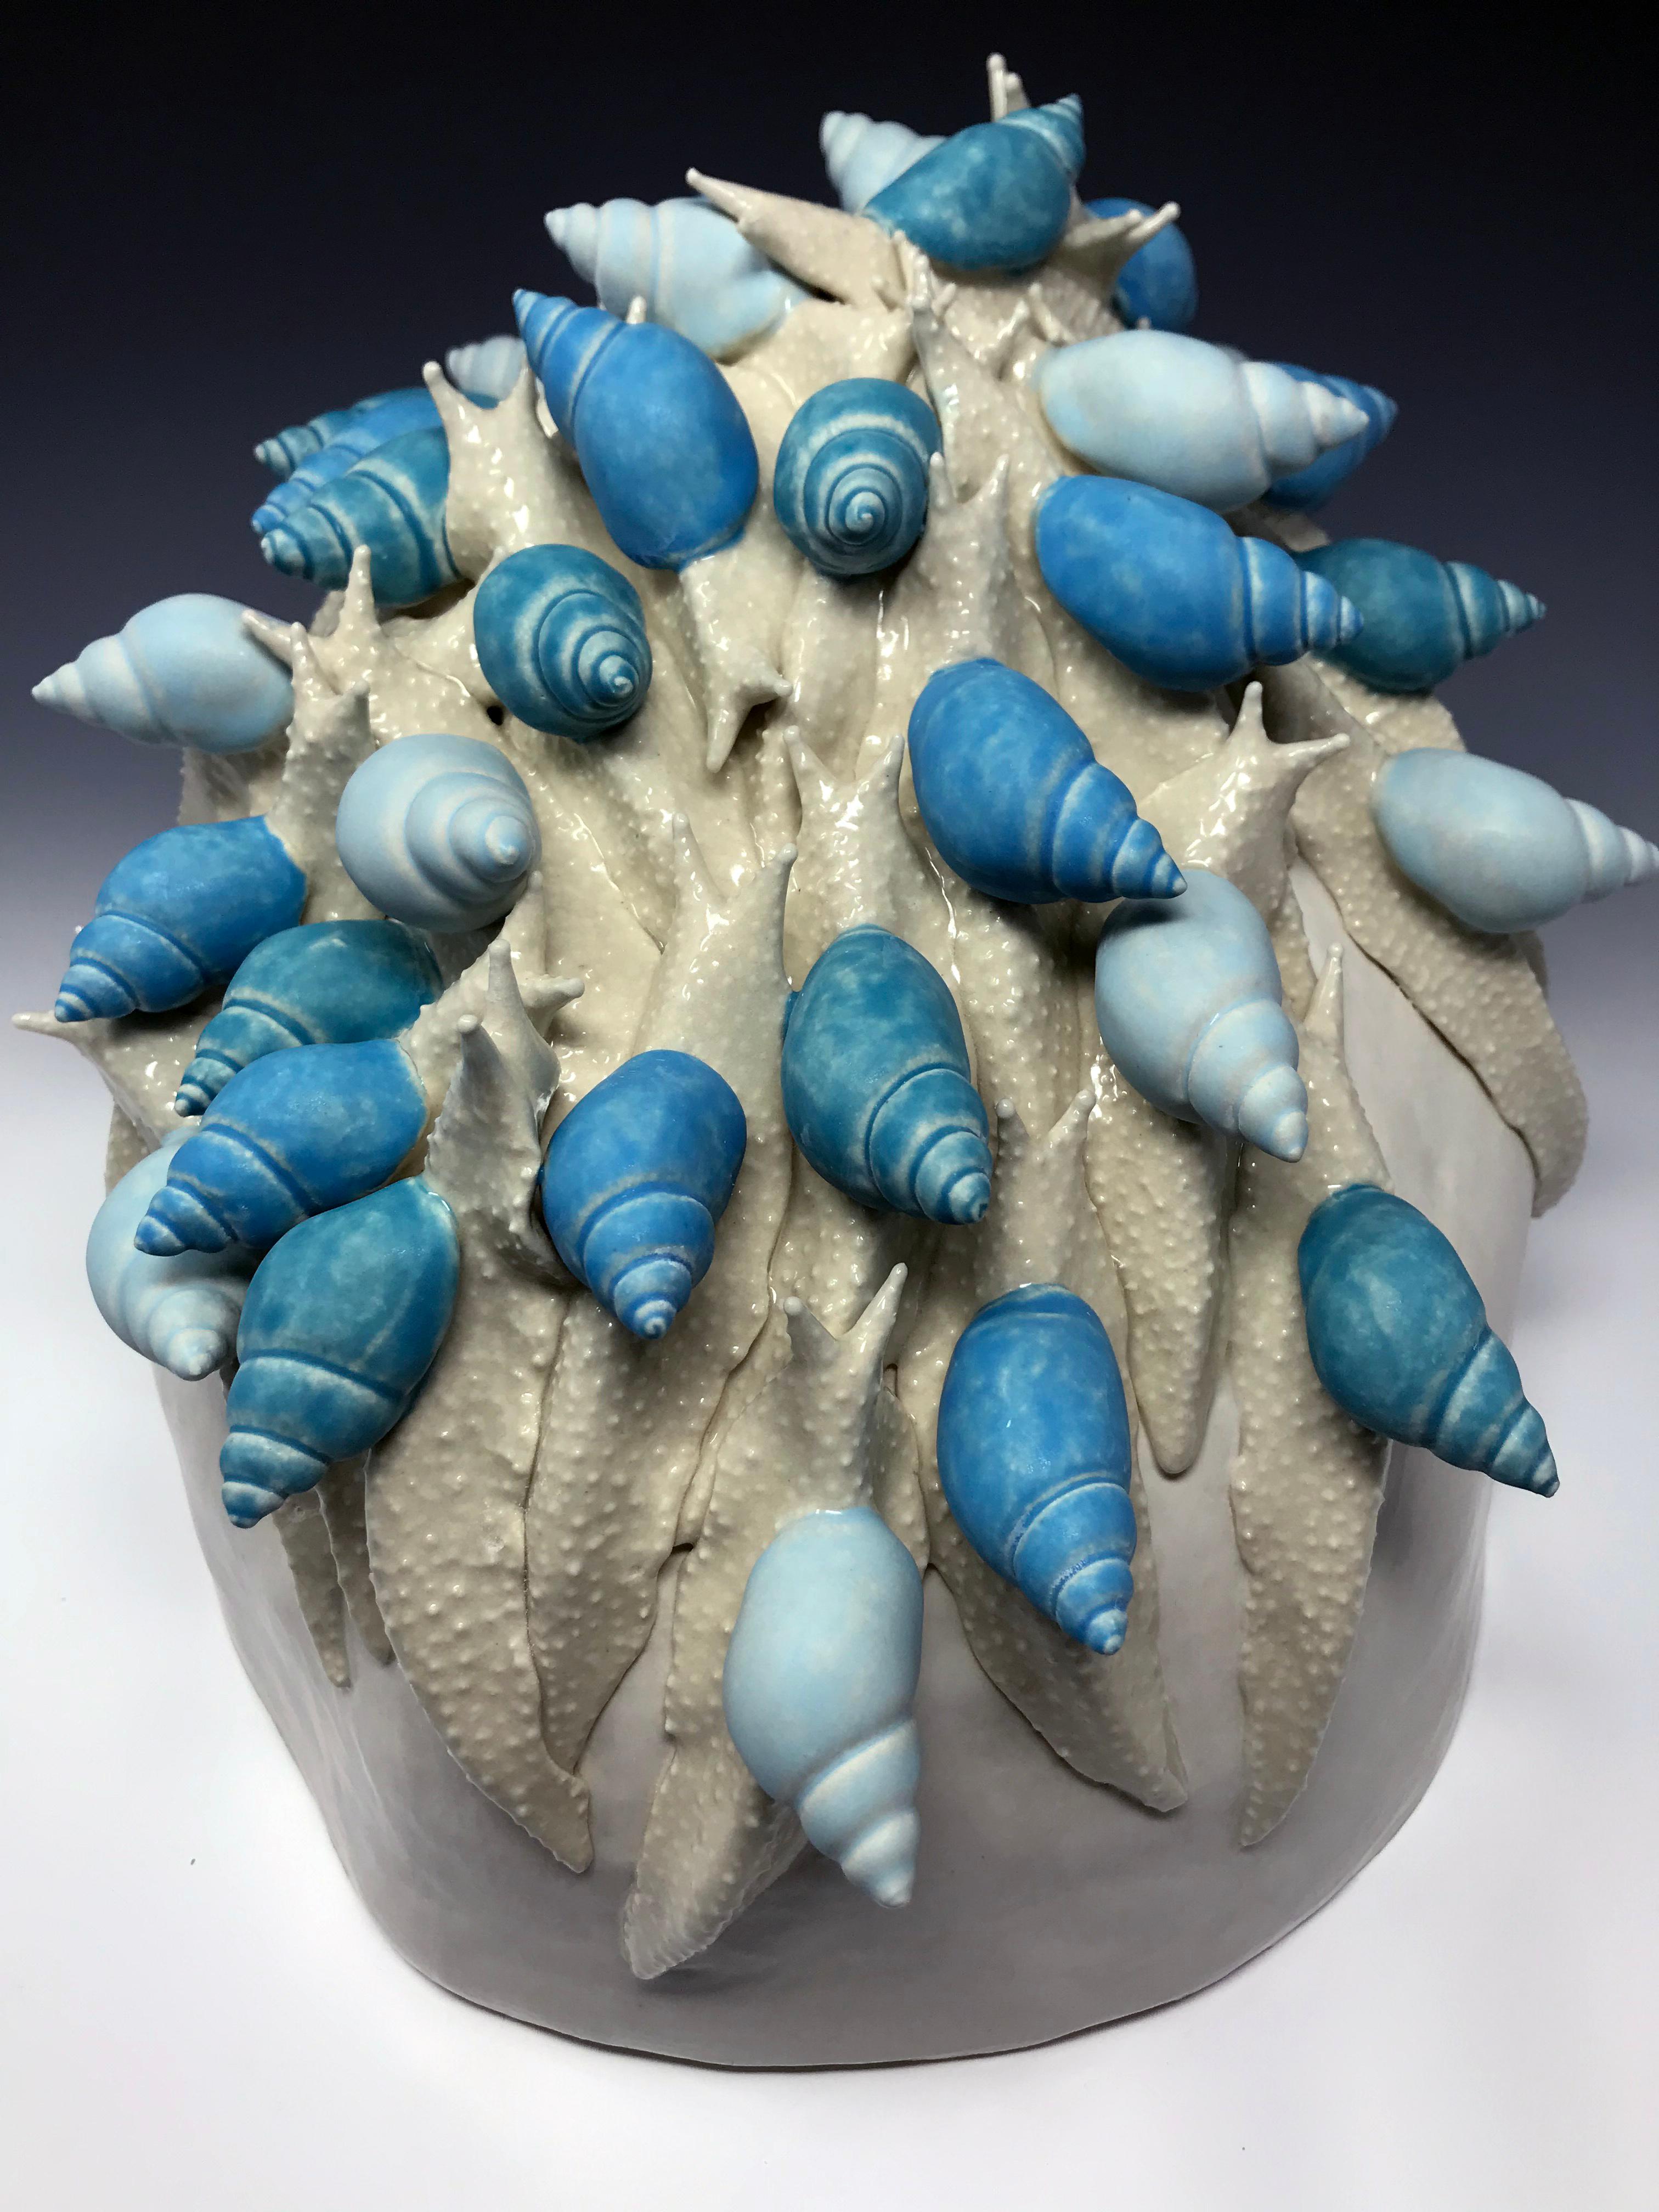 Ceramic Snail - 19 For Sale on 1stDibs